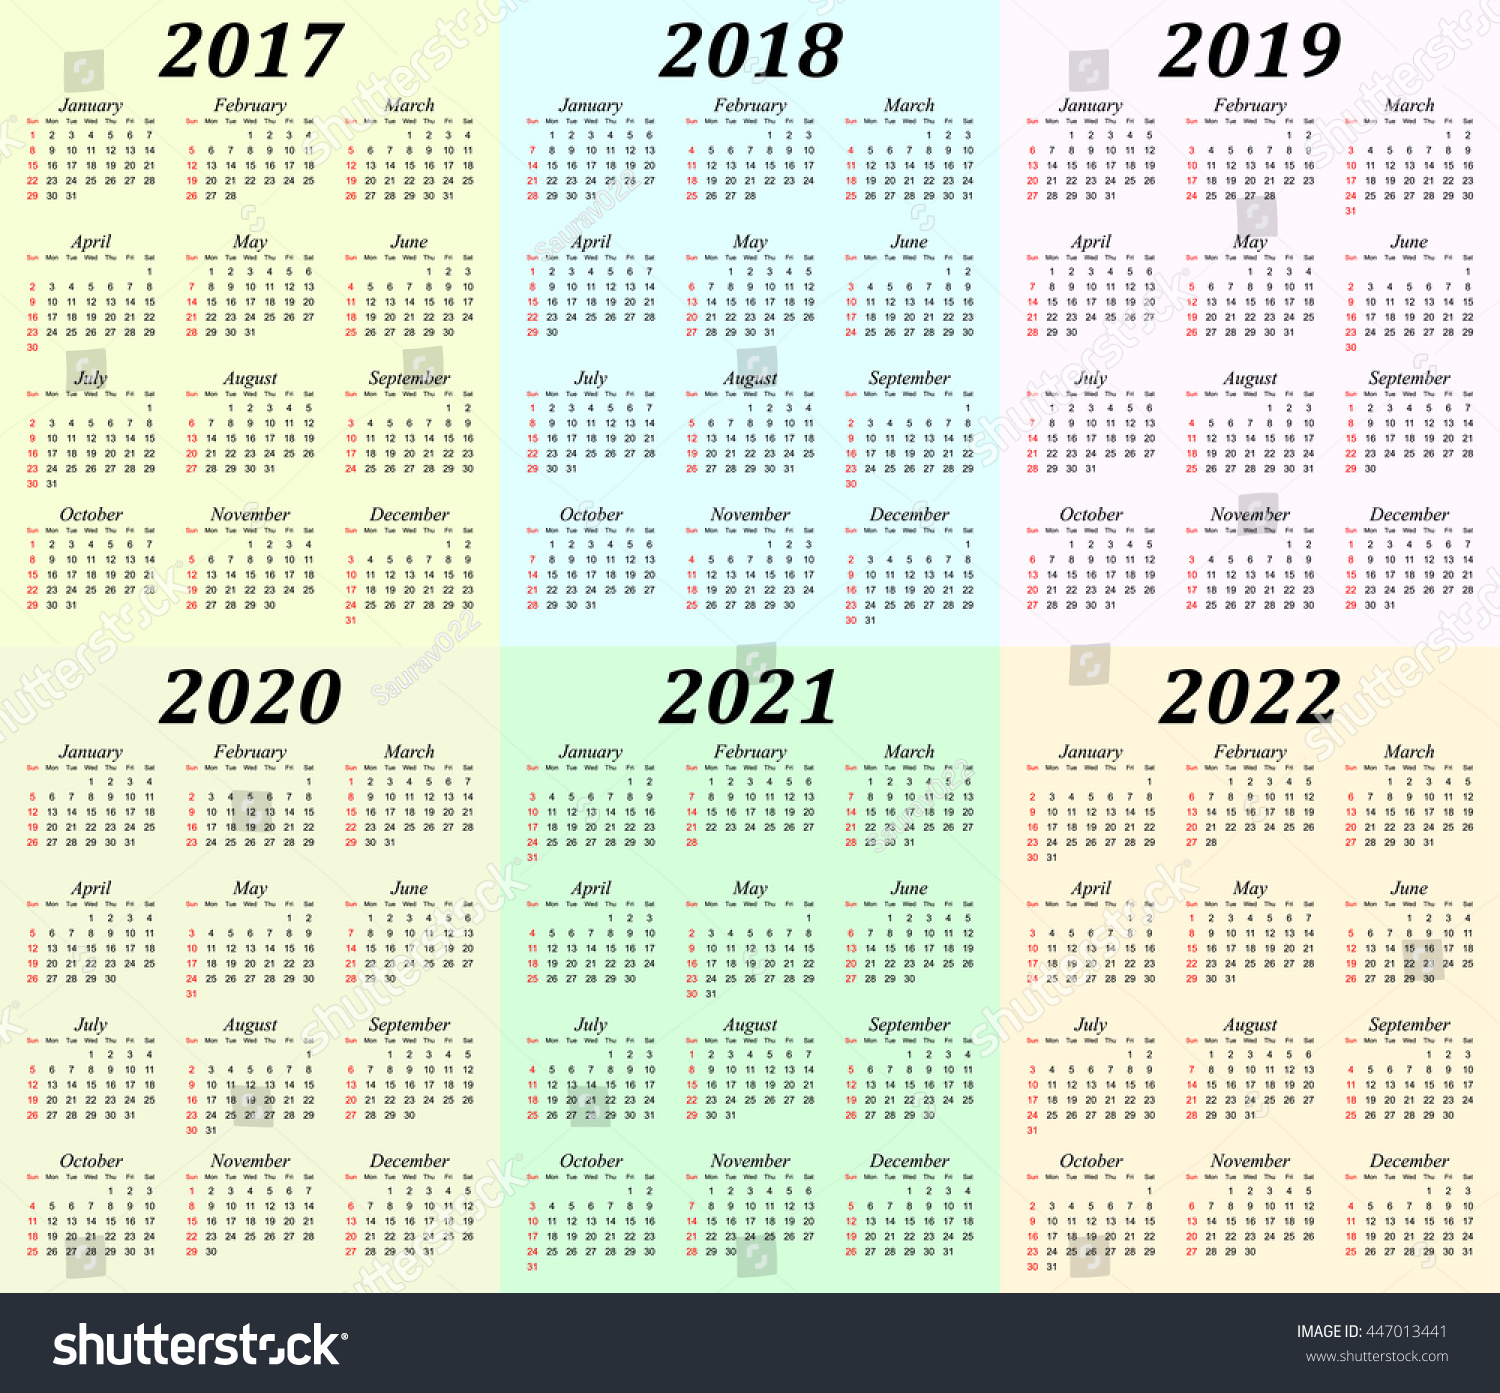 Six Flags Calendar 2022 Six Year Vector Calendar 2017 2018 Stock Vector (Royalty Free) 447013441